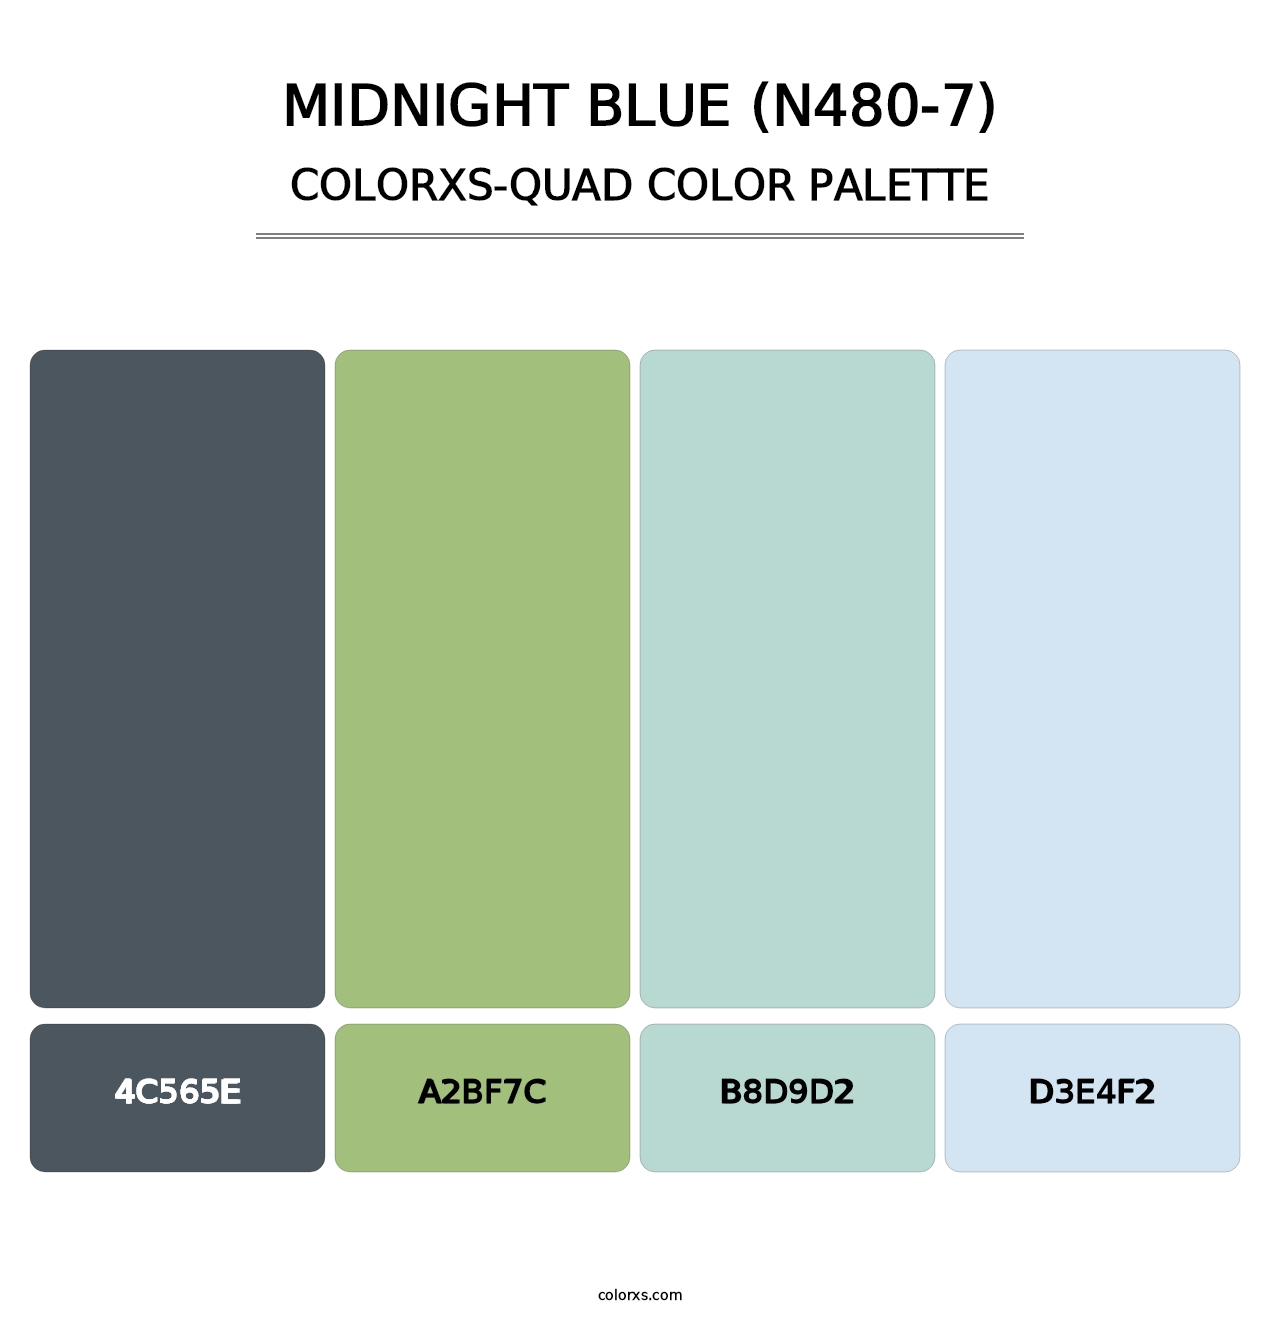 Midnight Blue (N480-7) - Colorxs Quad Palette